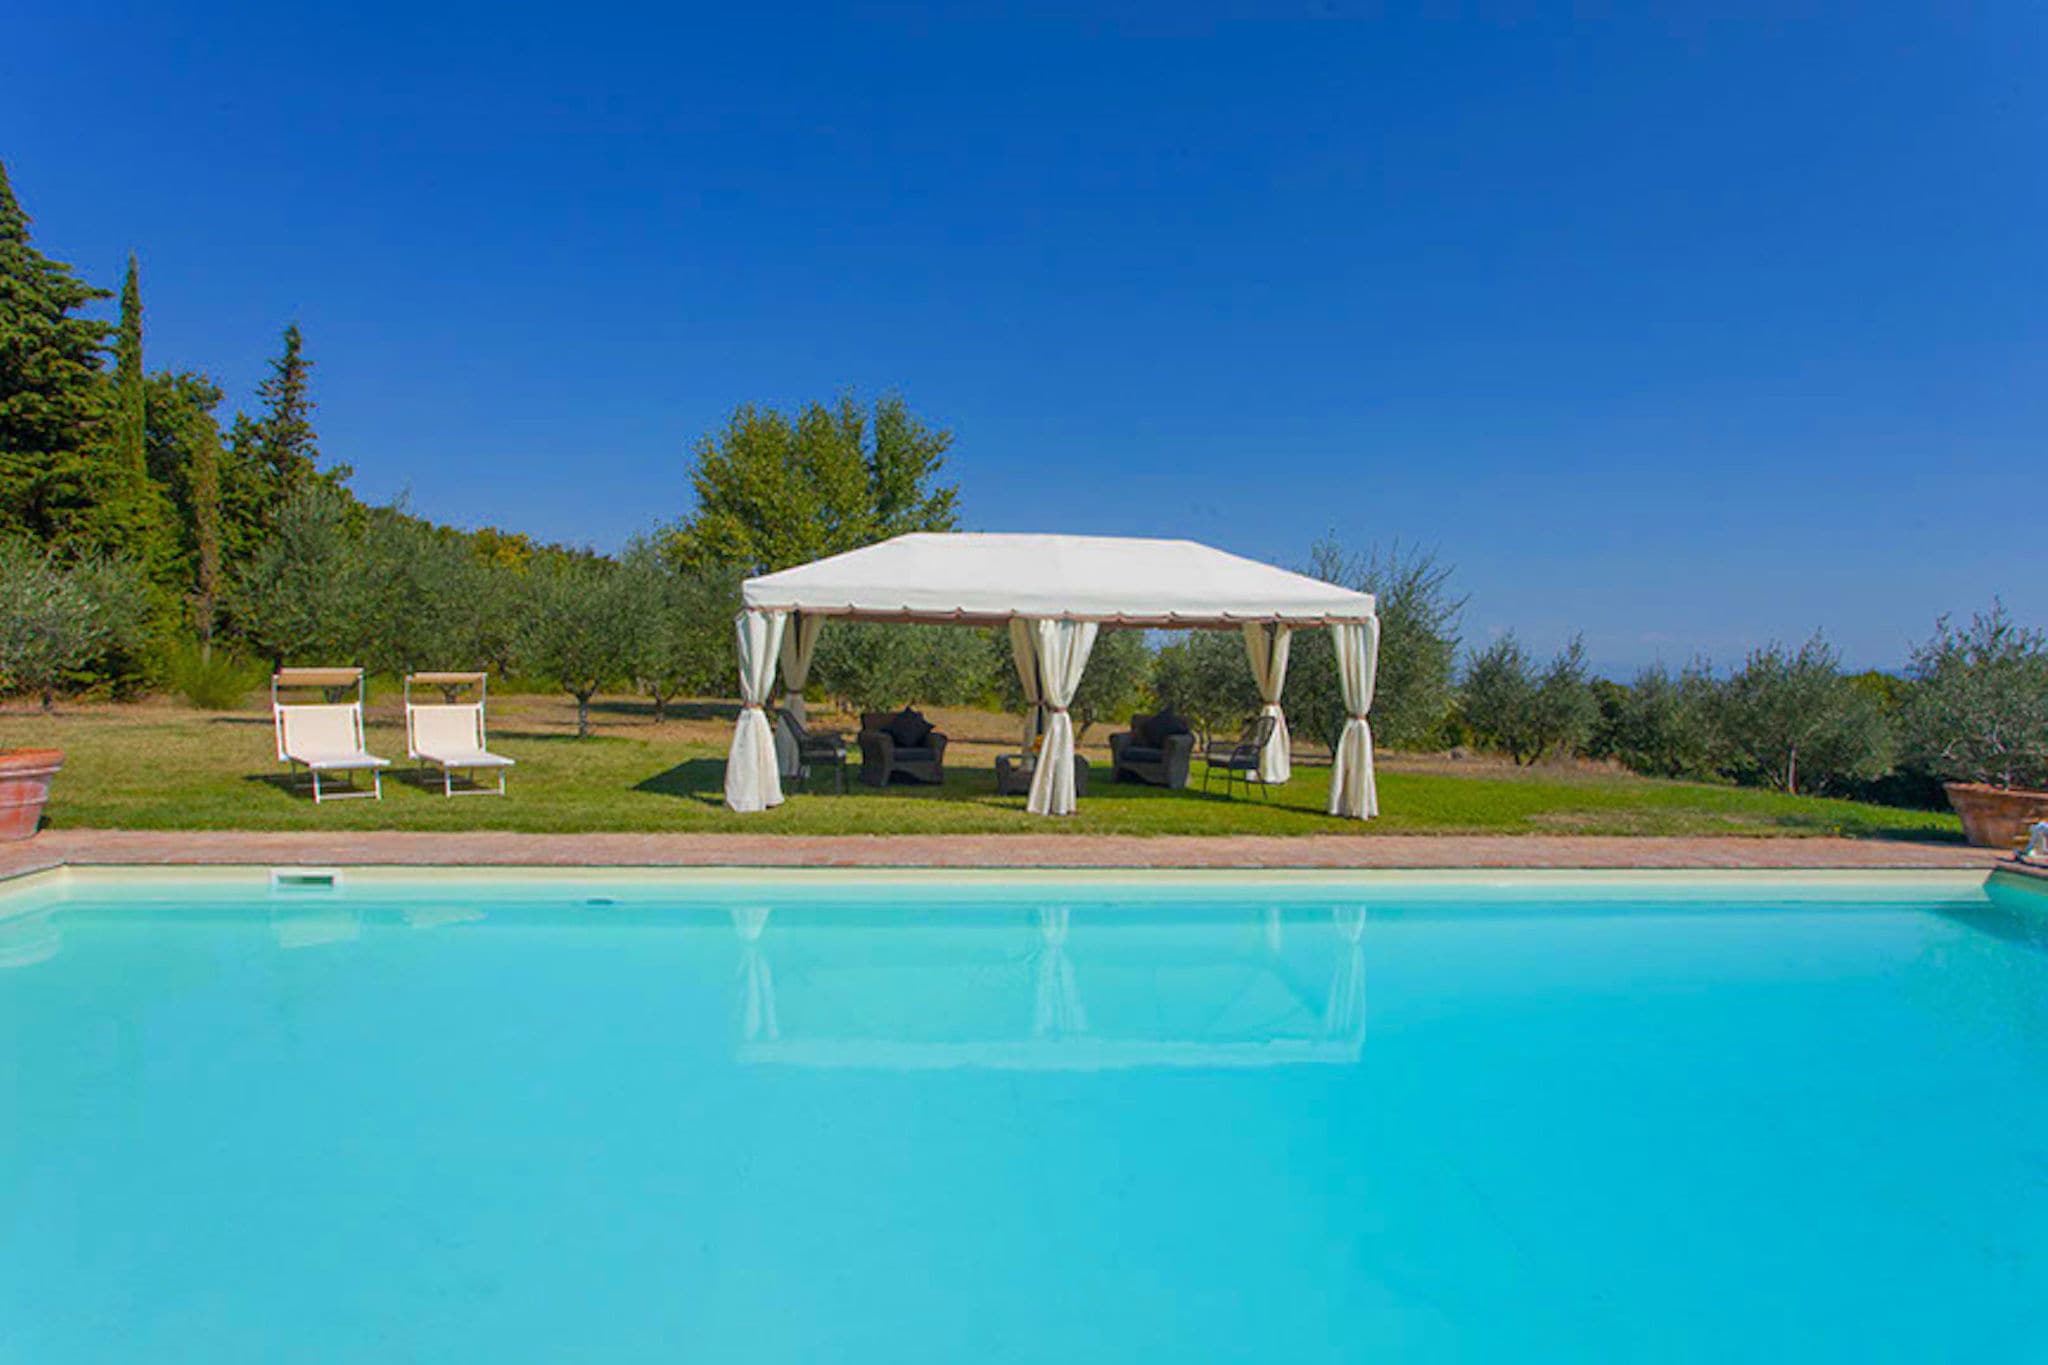 Quaint Villa in Cetona with Swimming  Pool